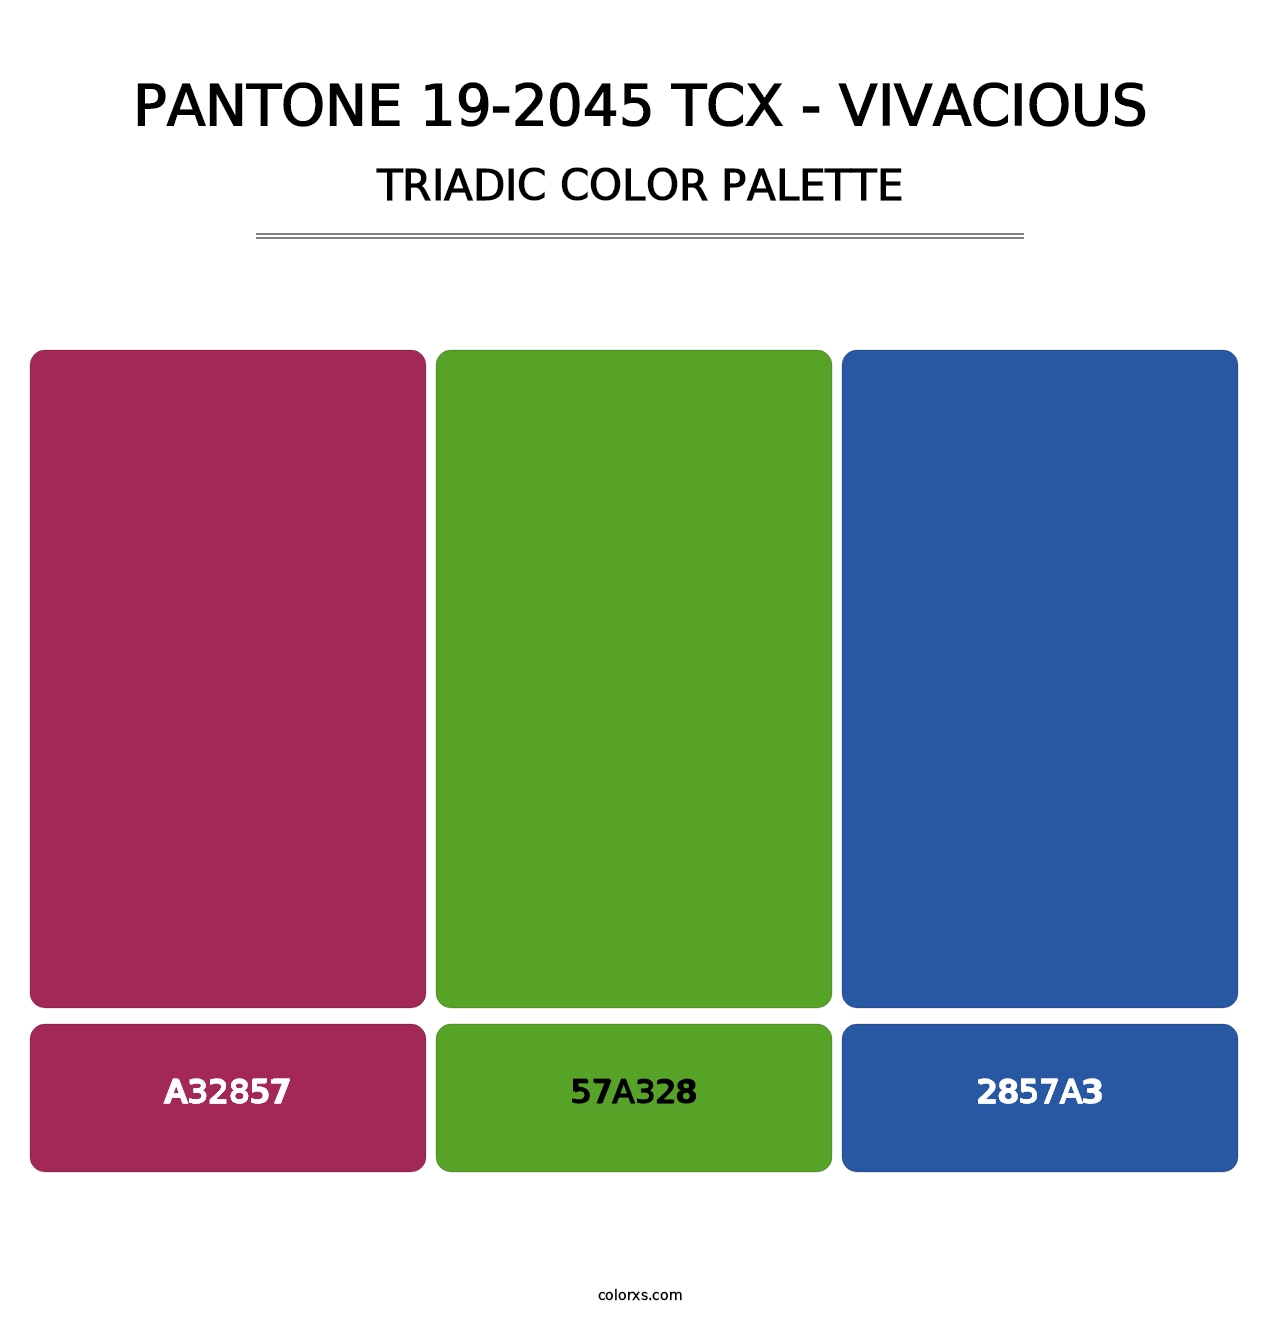 PANTONE 19-2045 TCX - Vivacious - Triadic Color Palette